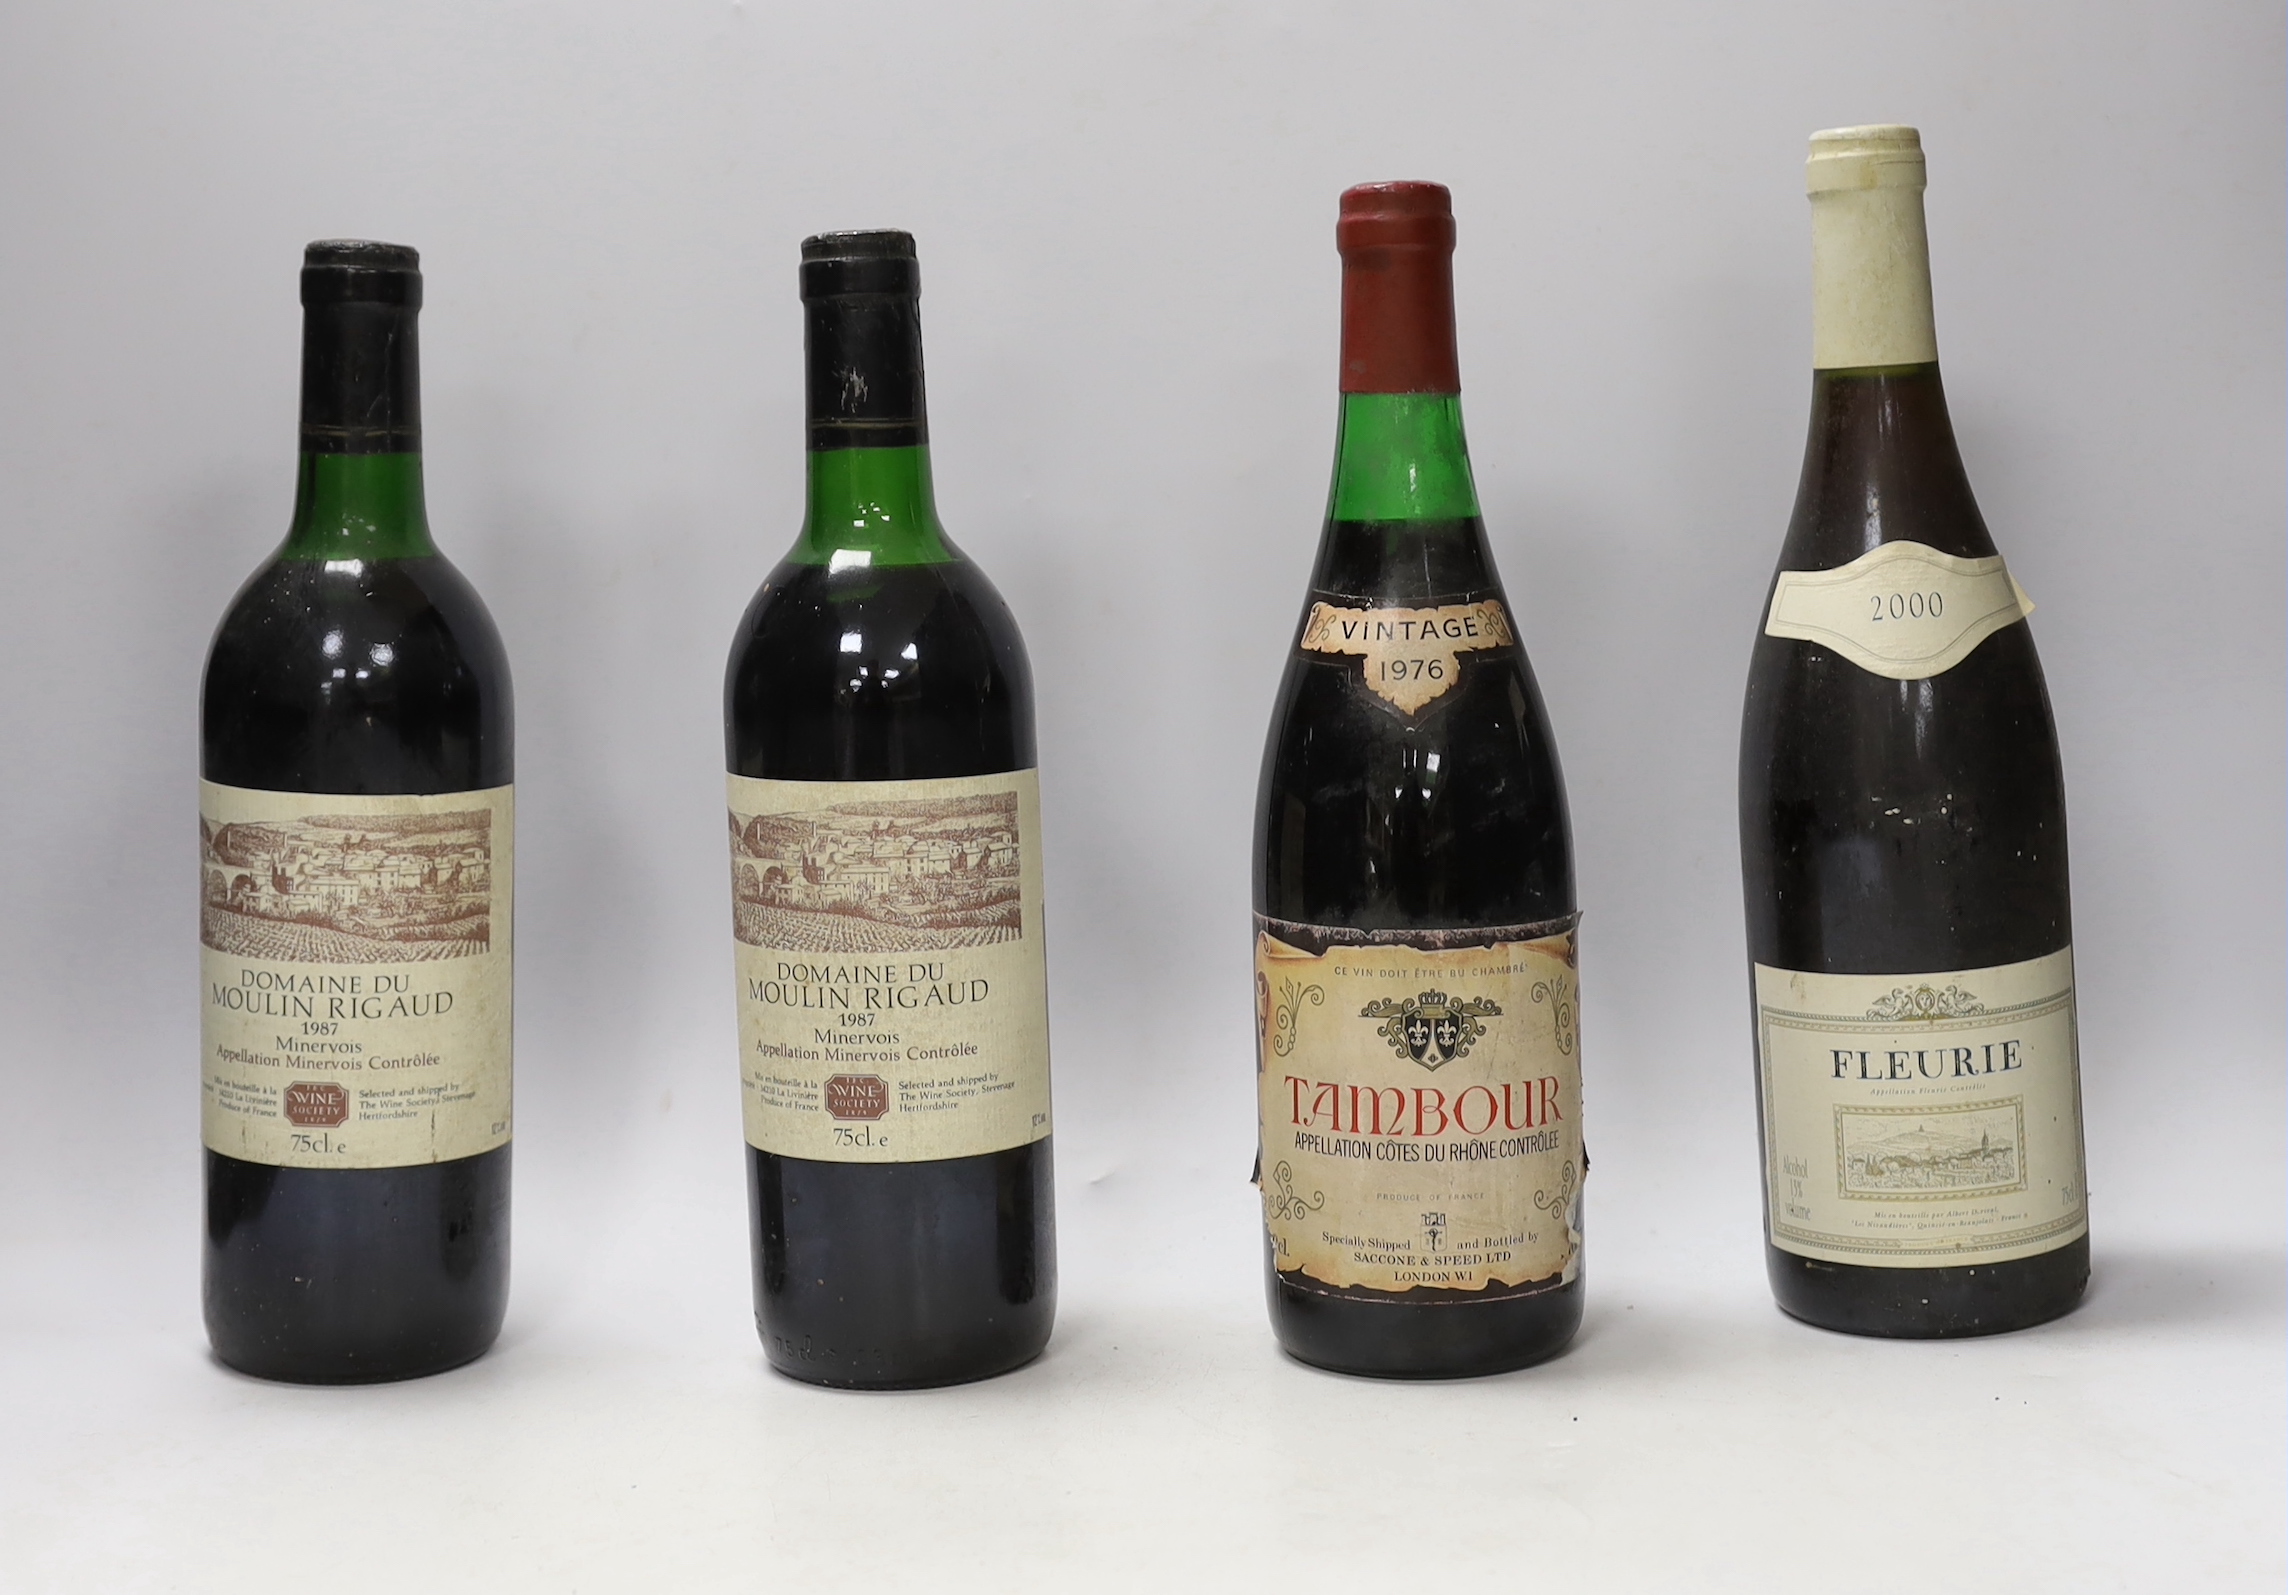 Nine bottles of red wines: a bottle of Tambour Vintage Cote du Rhône 1976, two bottles of 1987 Domaine Du Moulin Riguad, a bottle of Chateau Recougne Bordeaux Superieur 2000, a bottle Fleurie 2000 and four other red wine